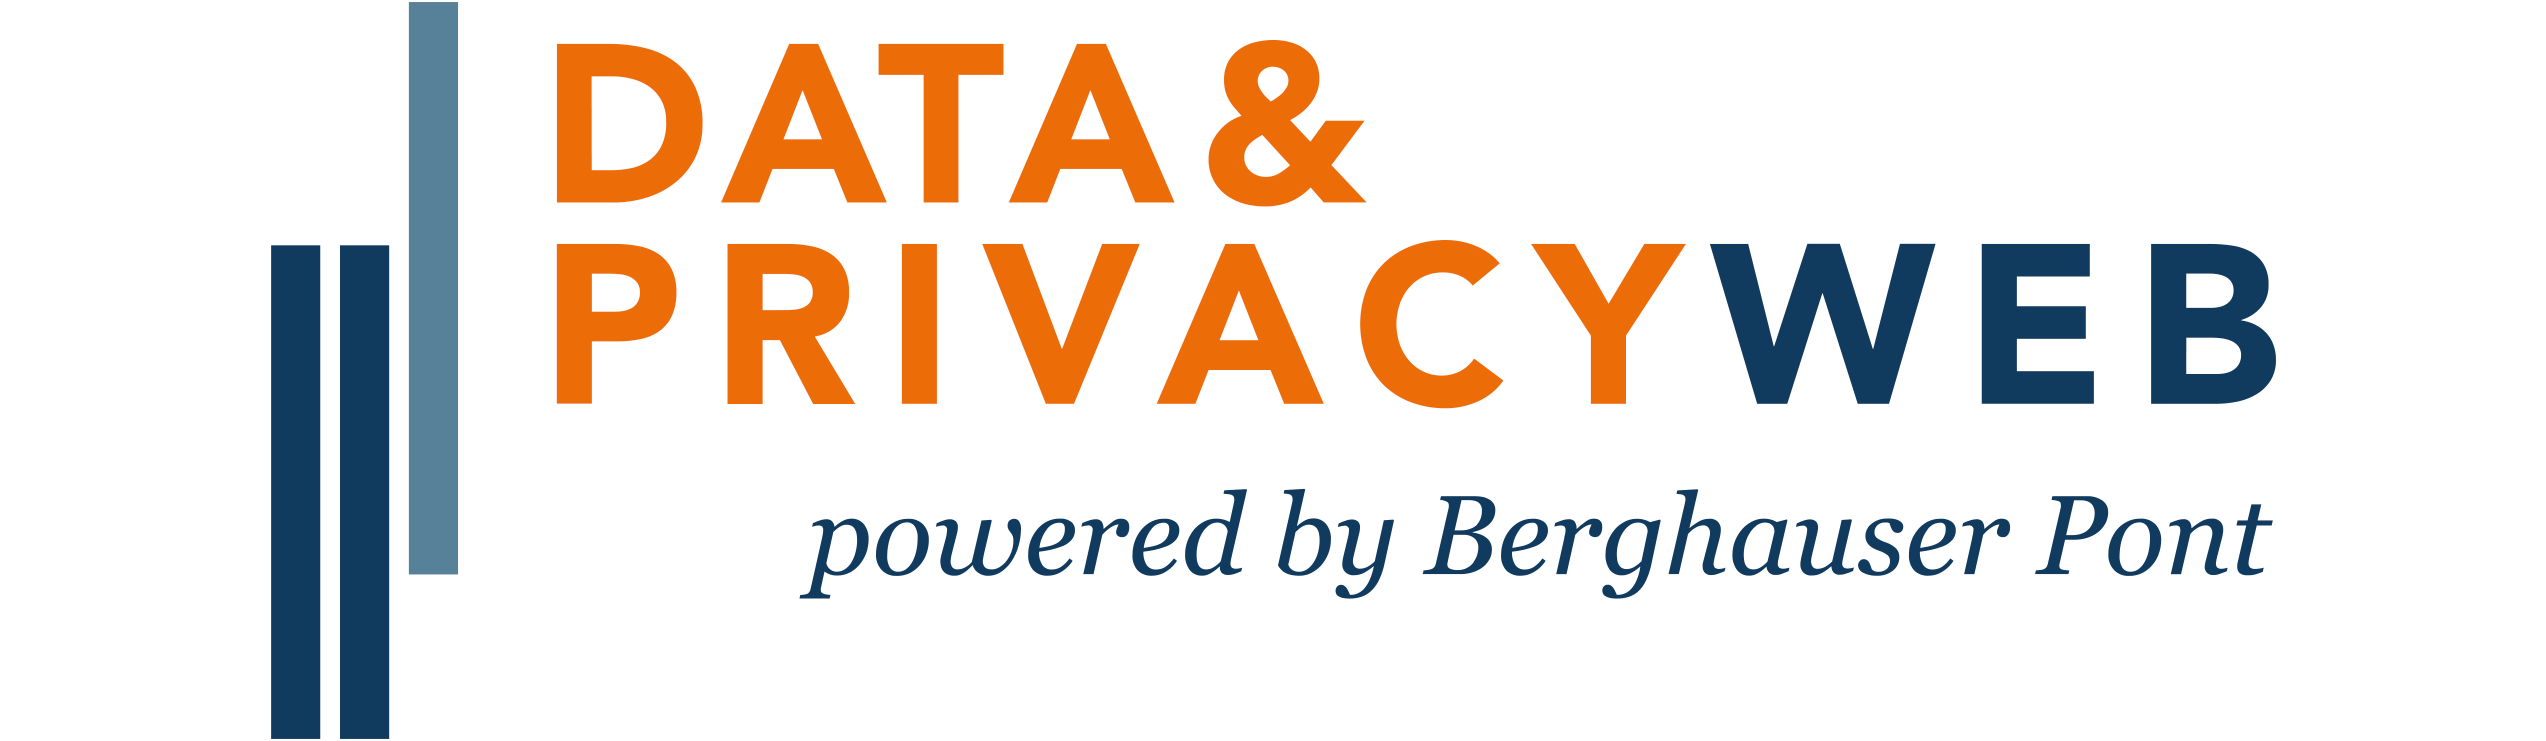 PONT Data&Privacy